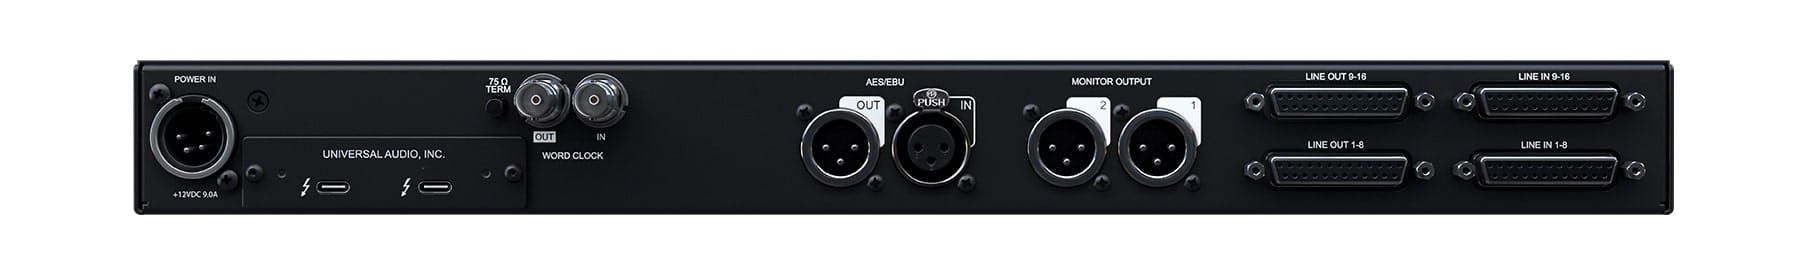 Universal Audio Apollo x16 Heritage Edition Thunderbolt 3 Audio Interface